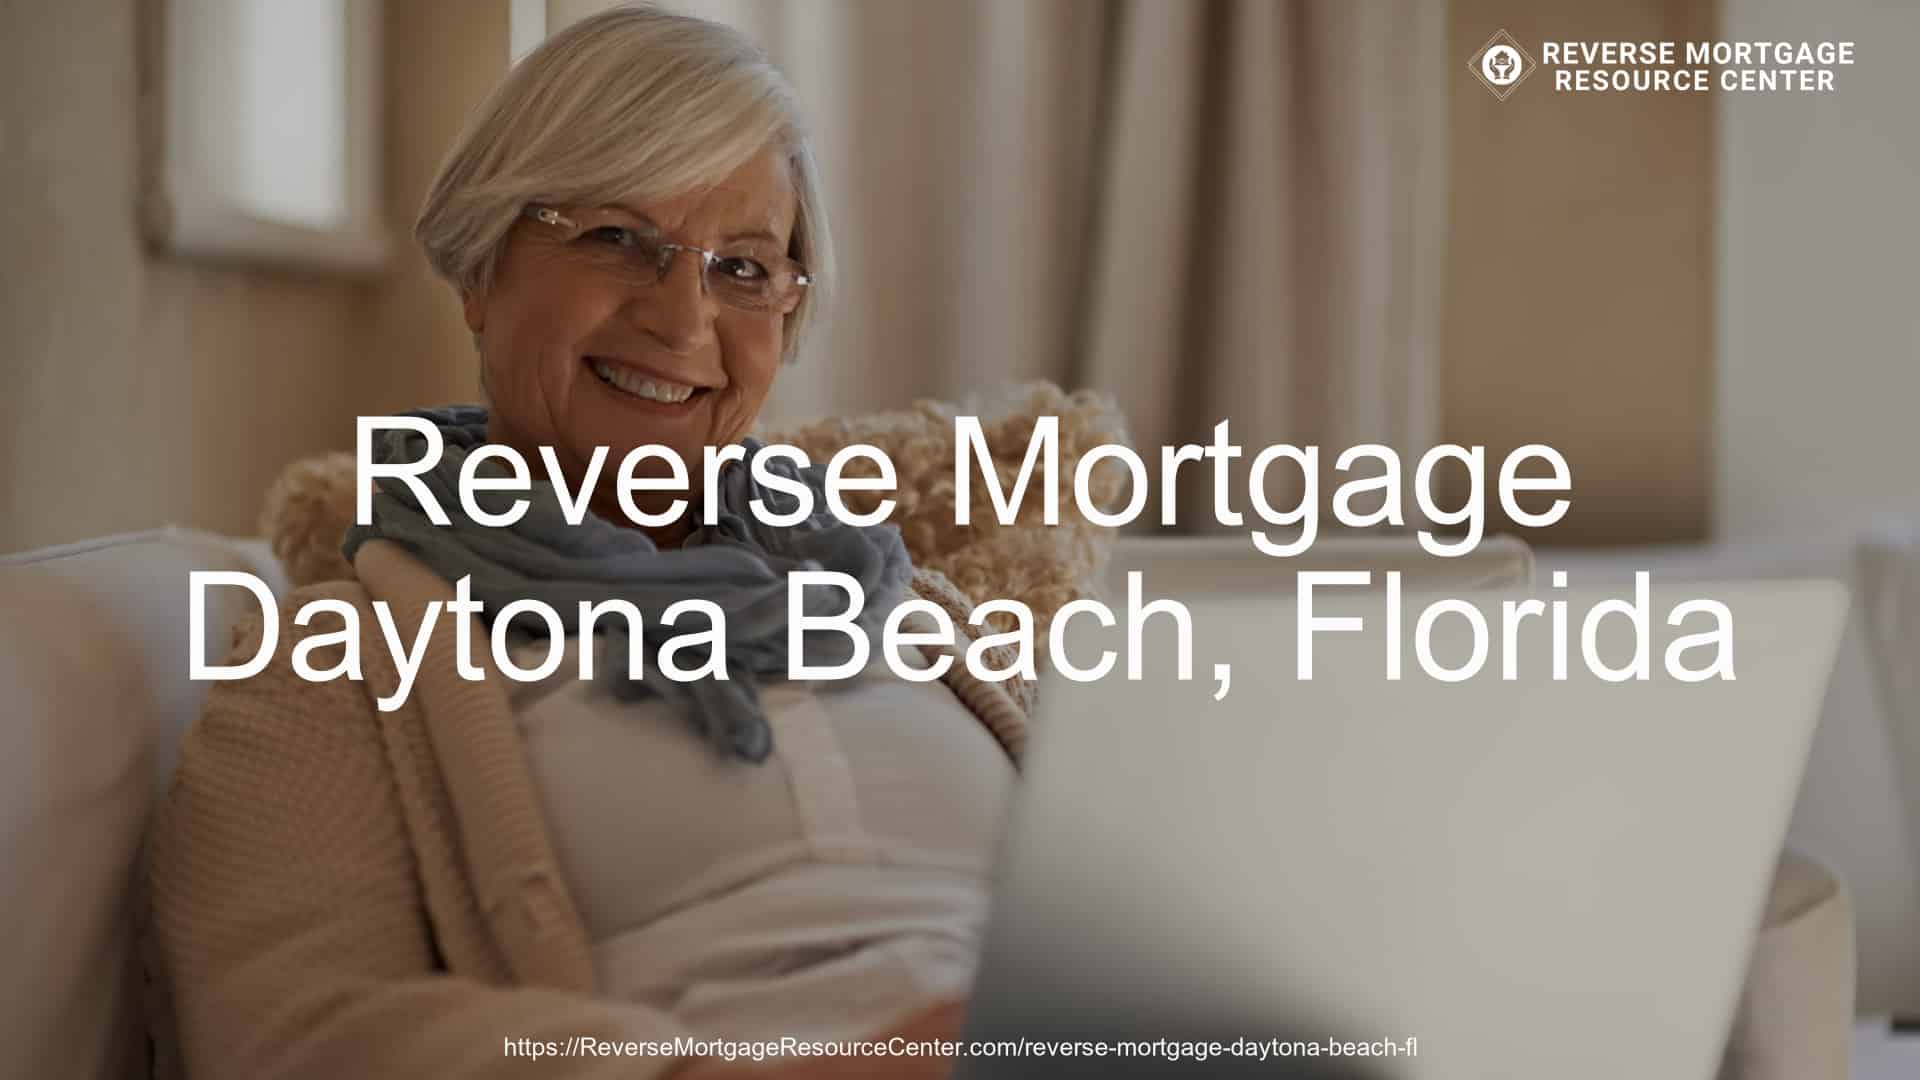 Reverse Mortgage Loans in Daytona Beach Florida